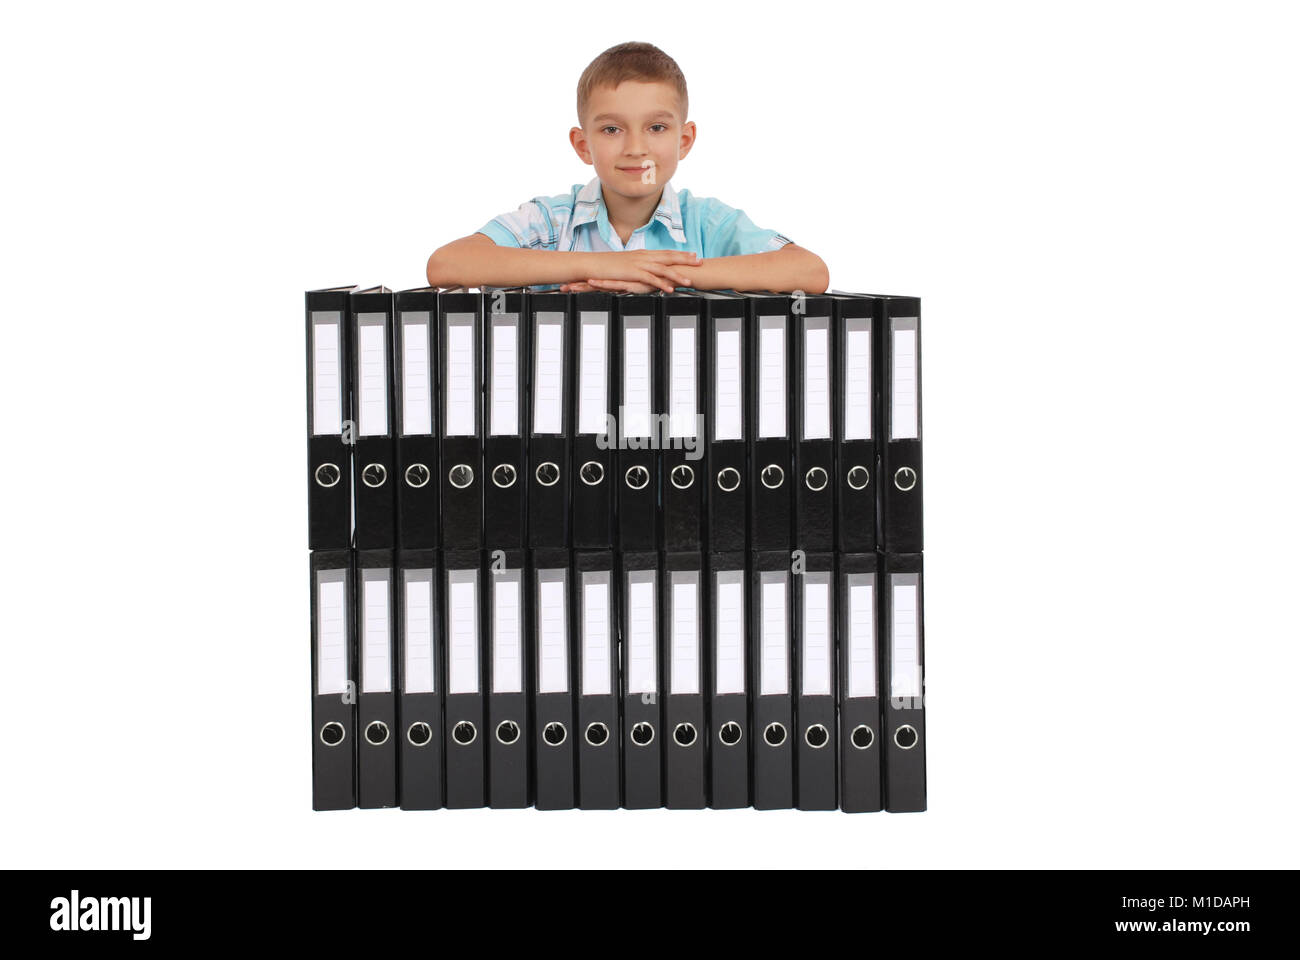 The boy bases on many big black folders on a white background Stock Photo